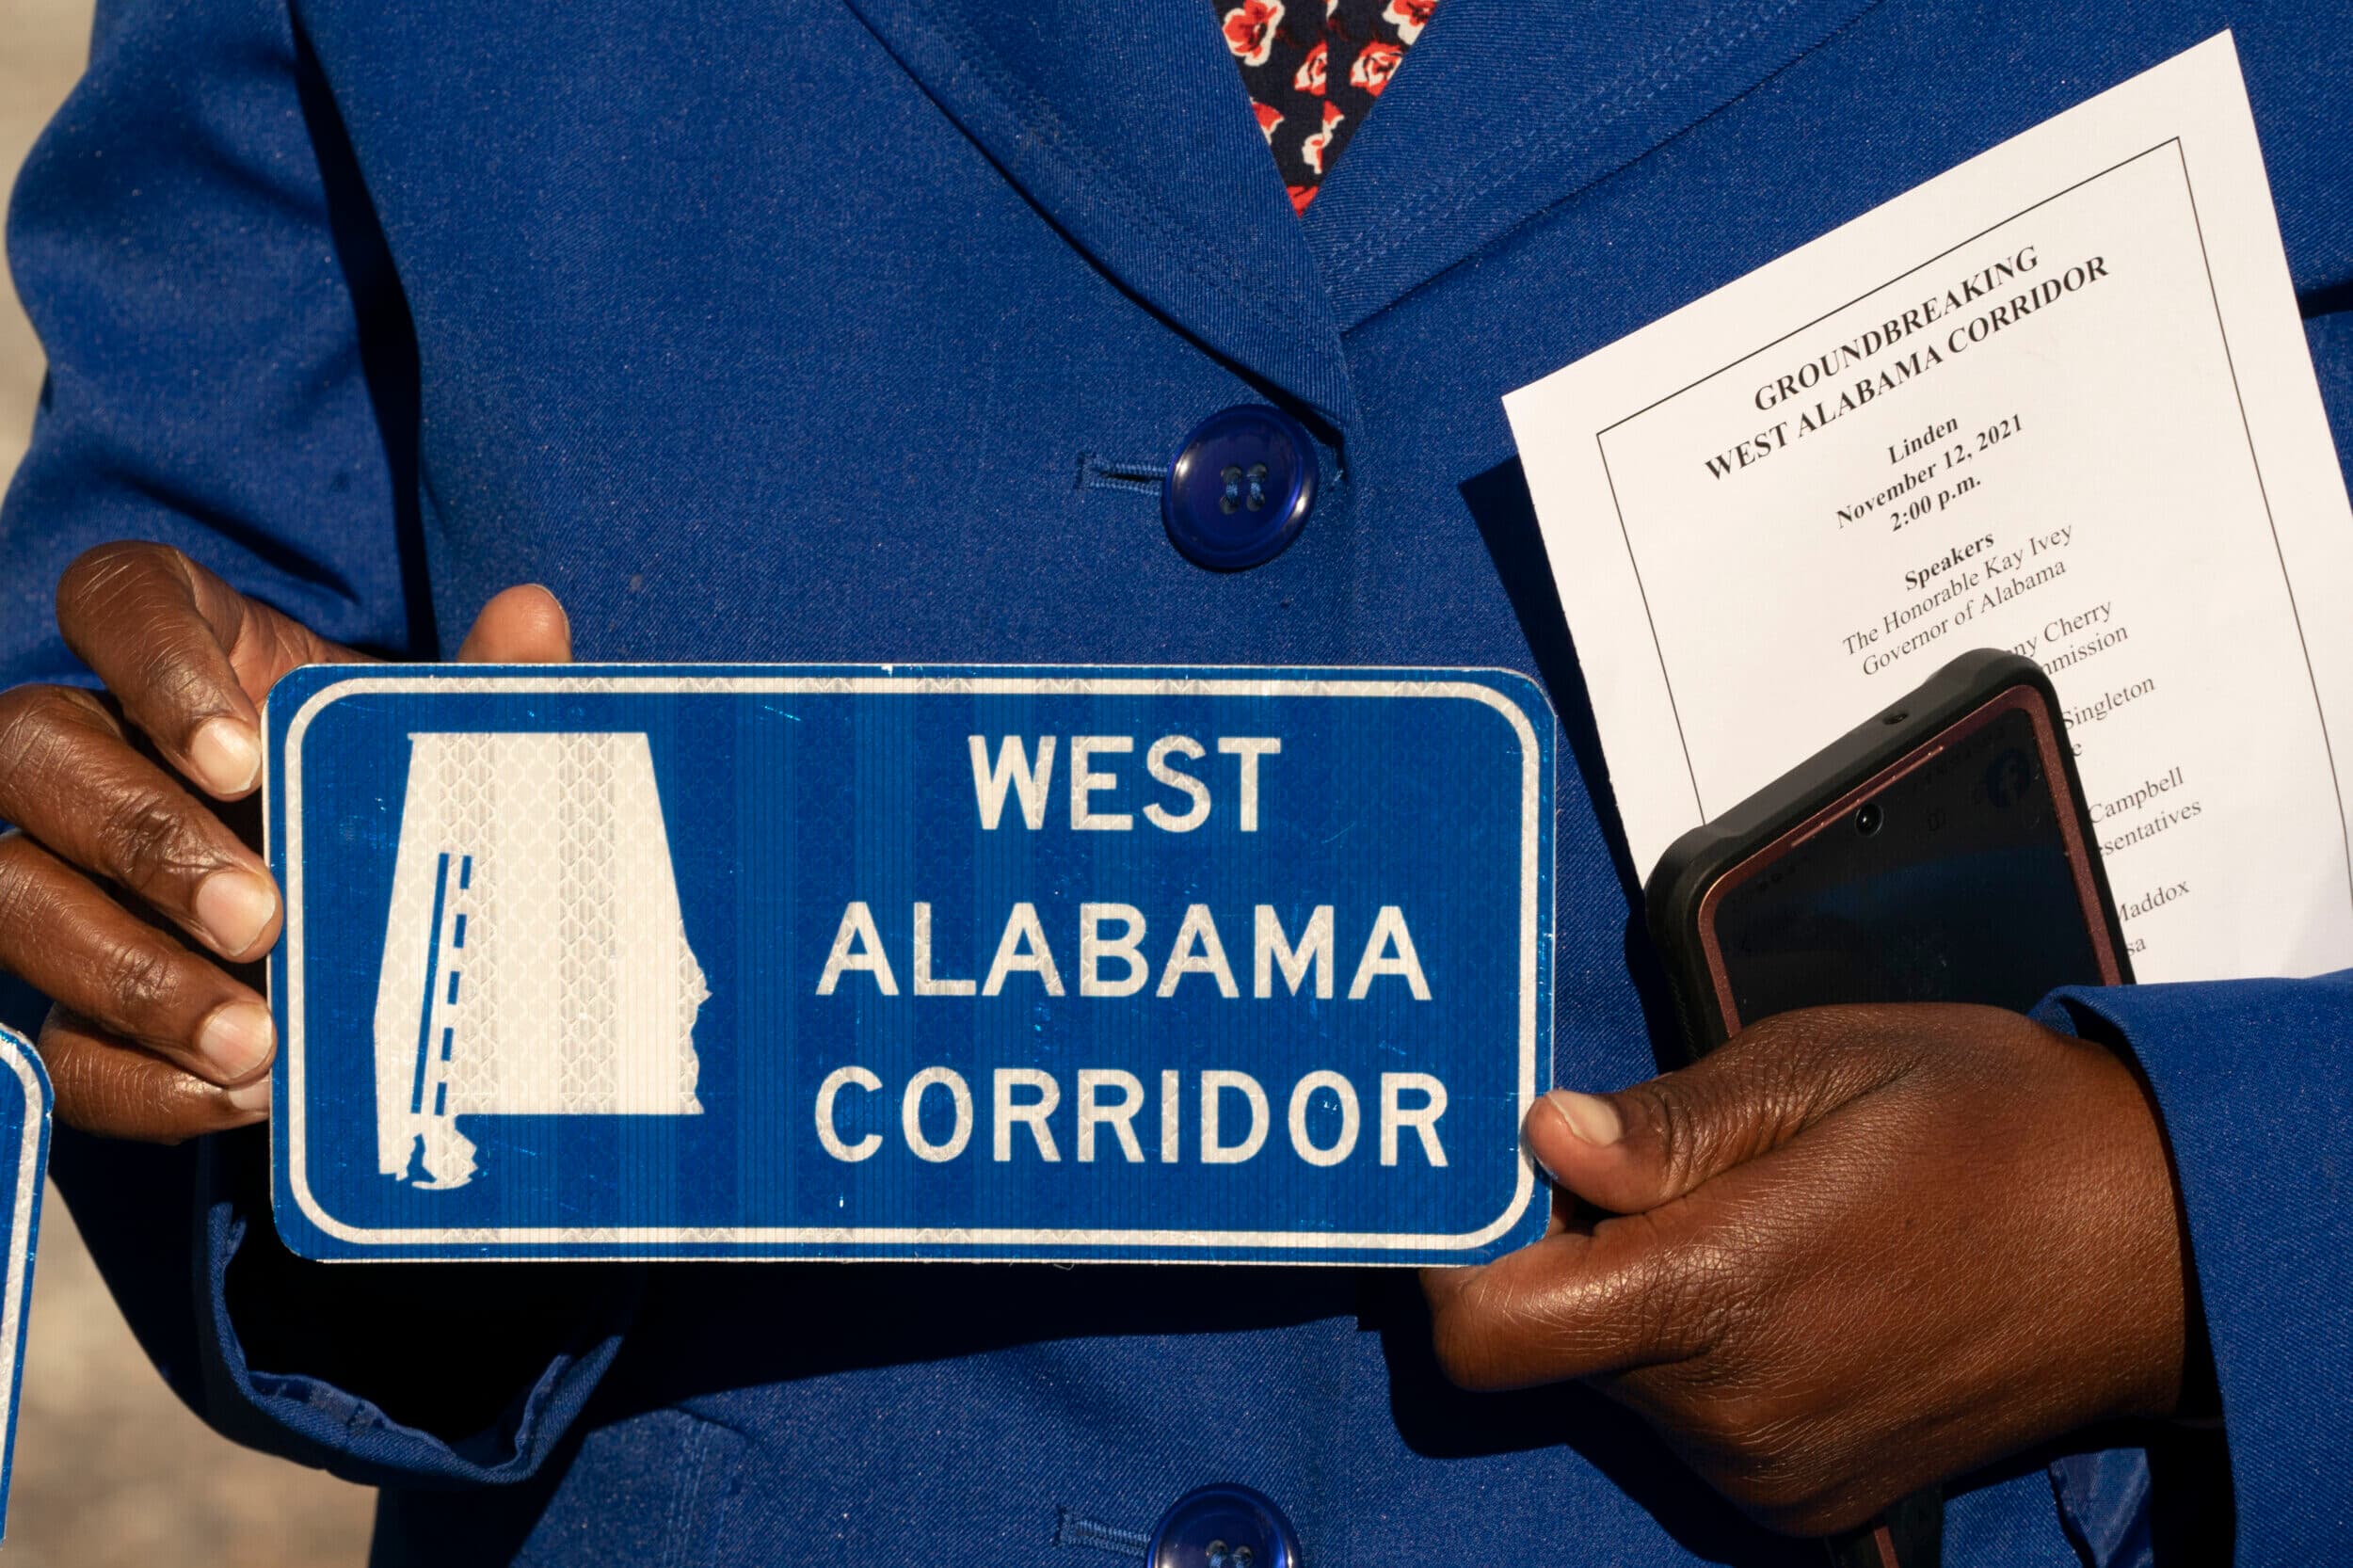 West Alabama Corridor